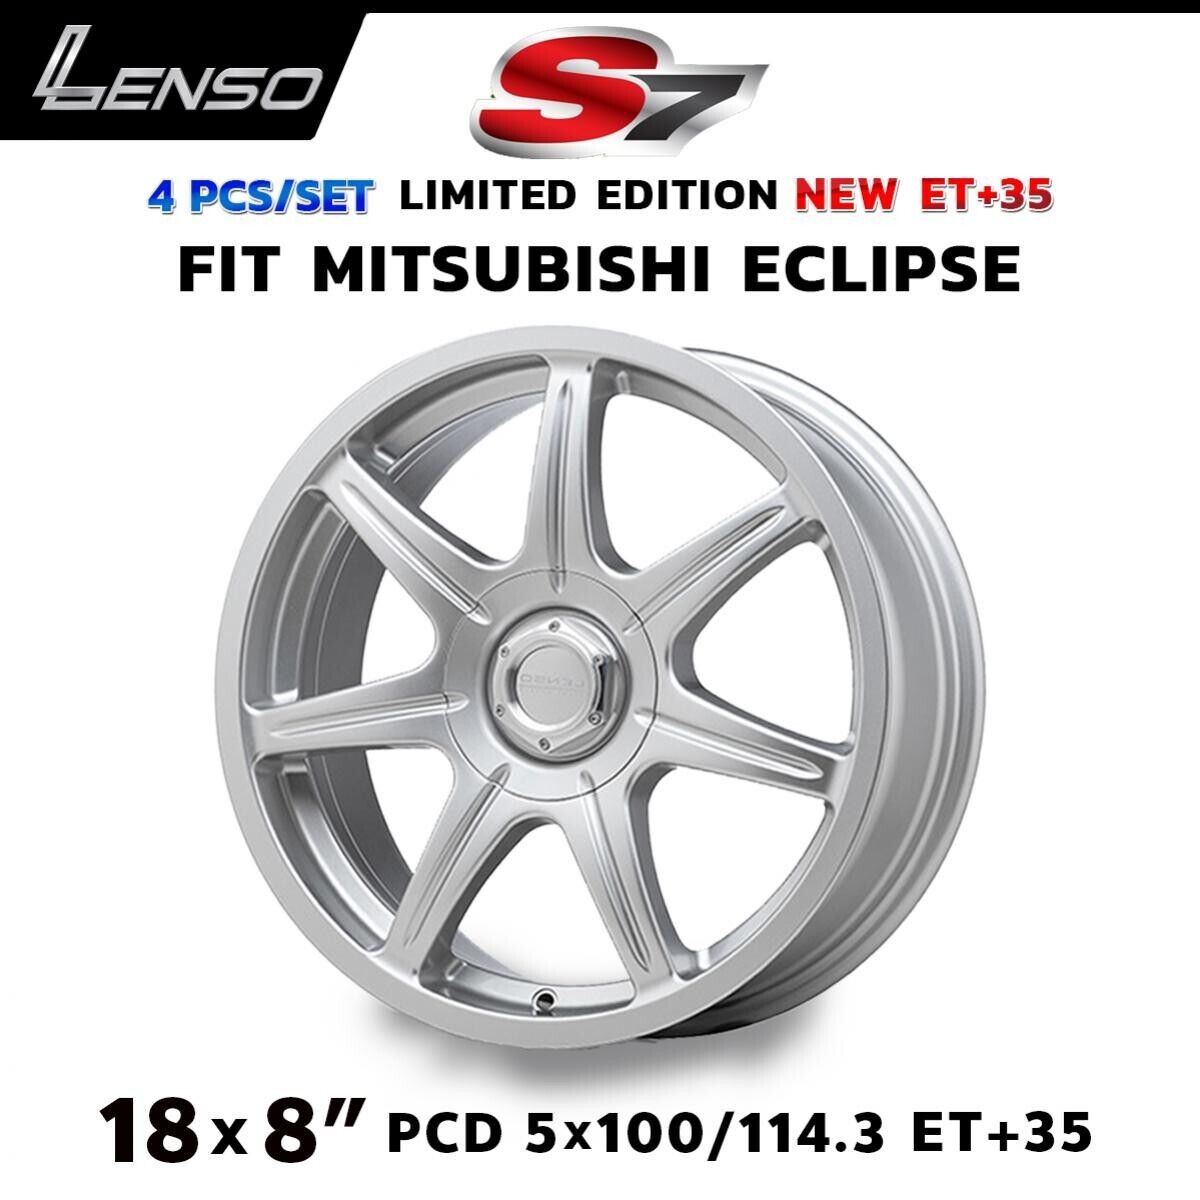 New Lenso Wheel S7 Rim 18x8 PCD 5x114.3 / 100 ET+35 Fits Mitsubishi Eclipse set4